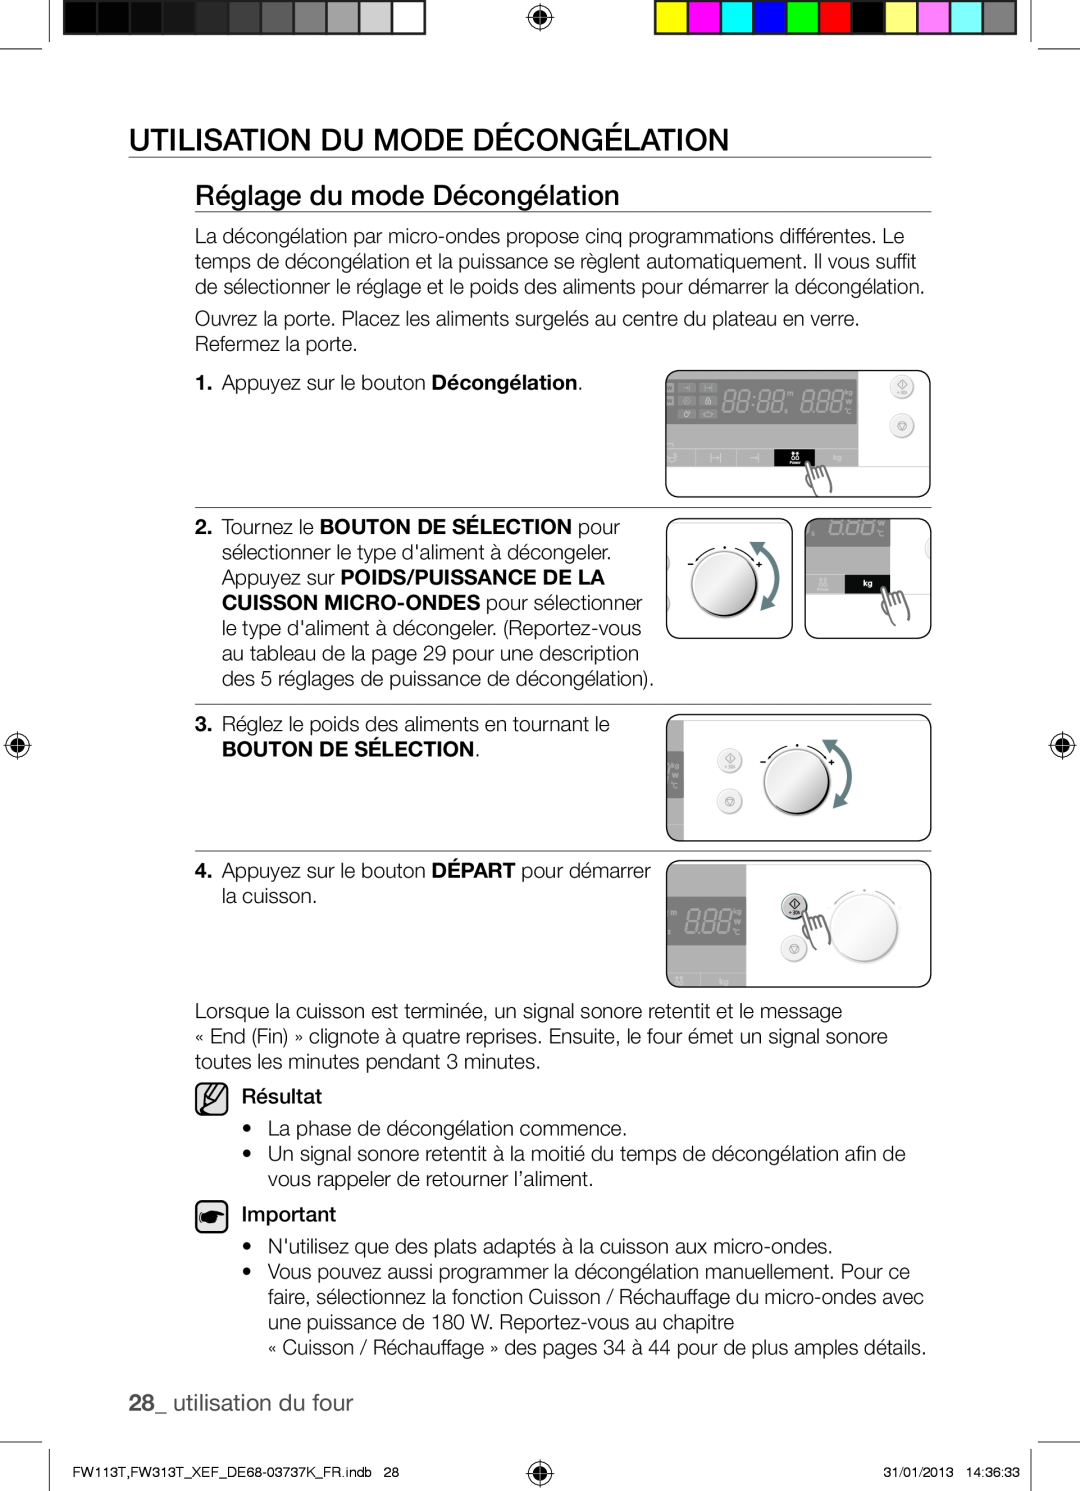 Samsung FW113T002/XEF manual Utilisation Du Mode Décongélation, Réglage du mode Décongélation, utilisation du four 